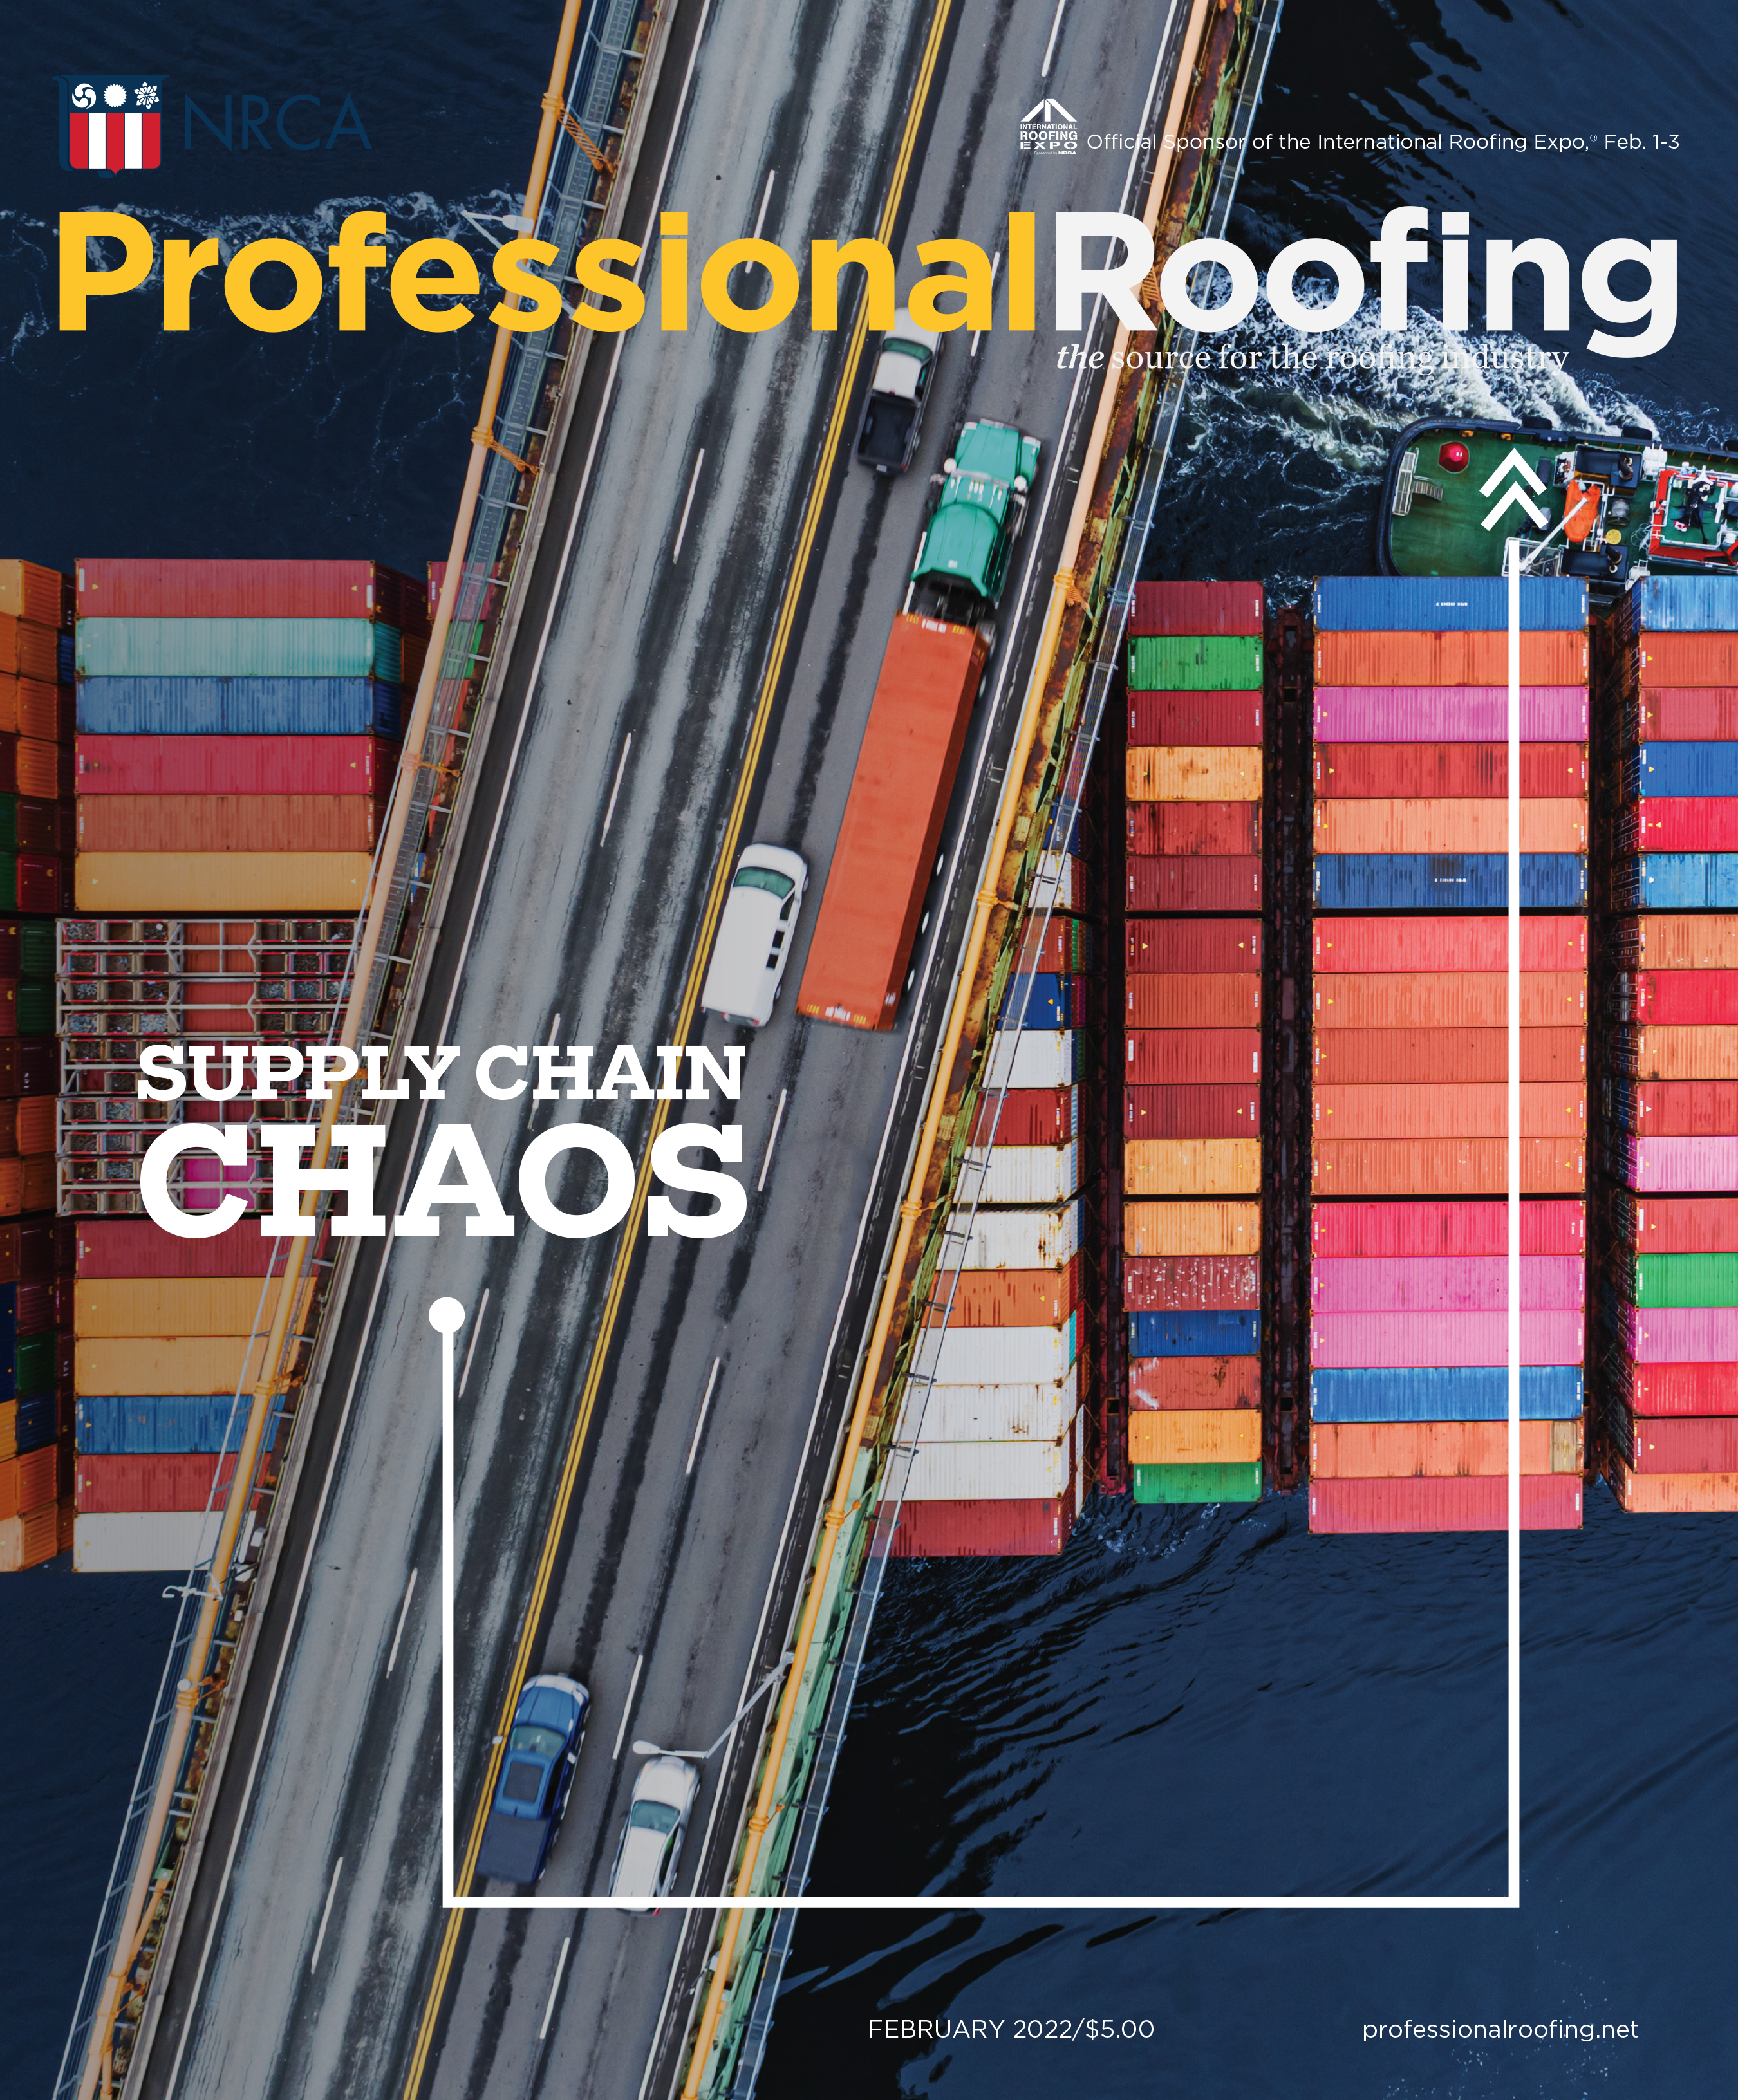 Professional Roofing Magazine 2/1/2022